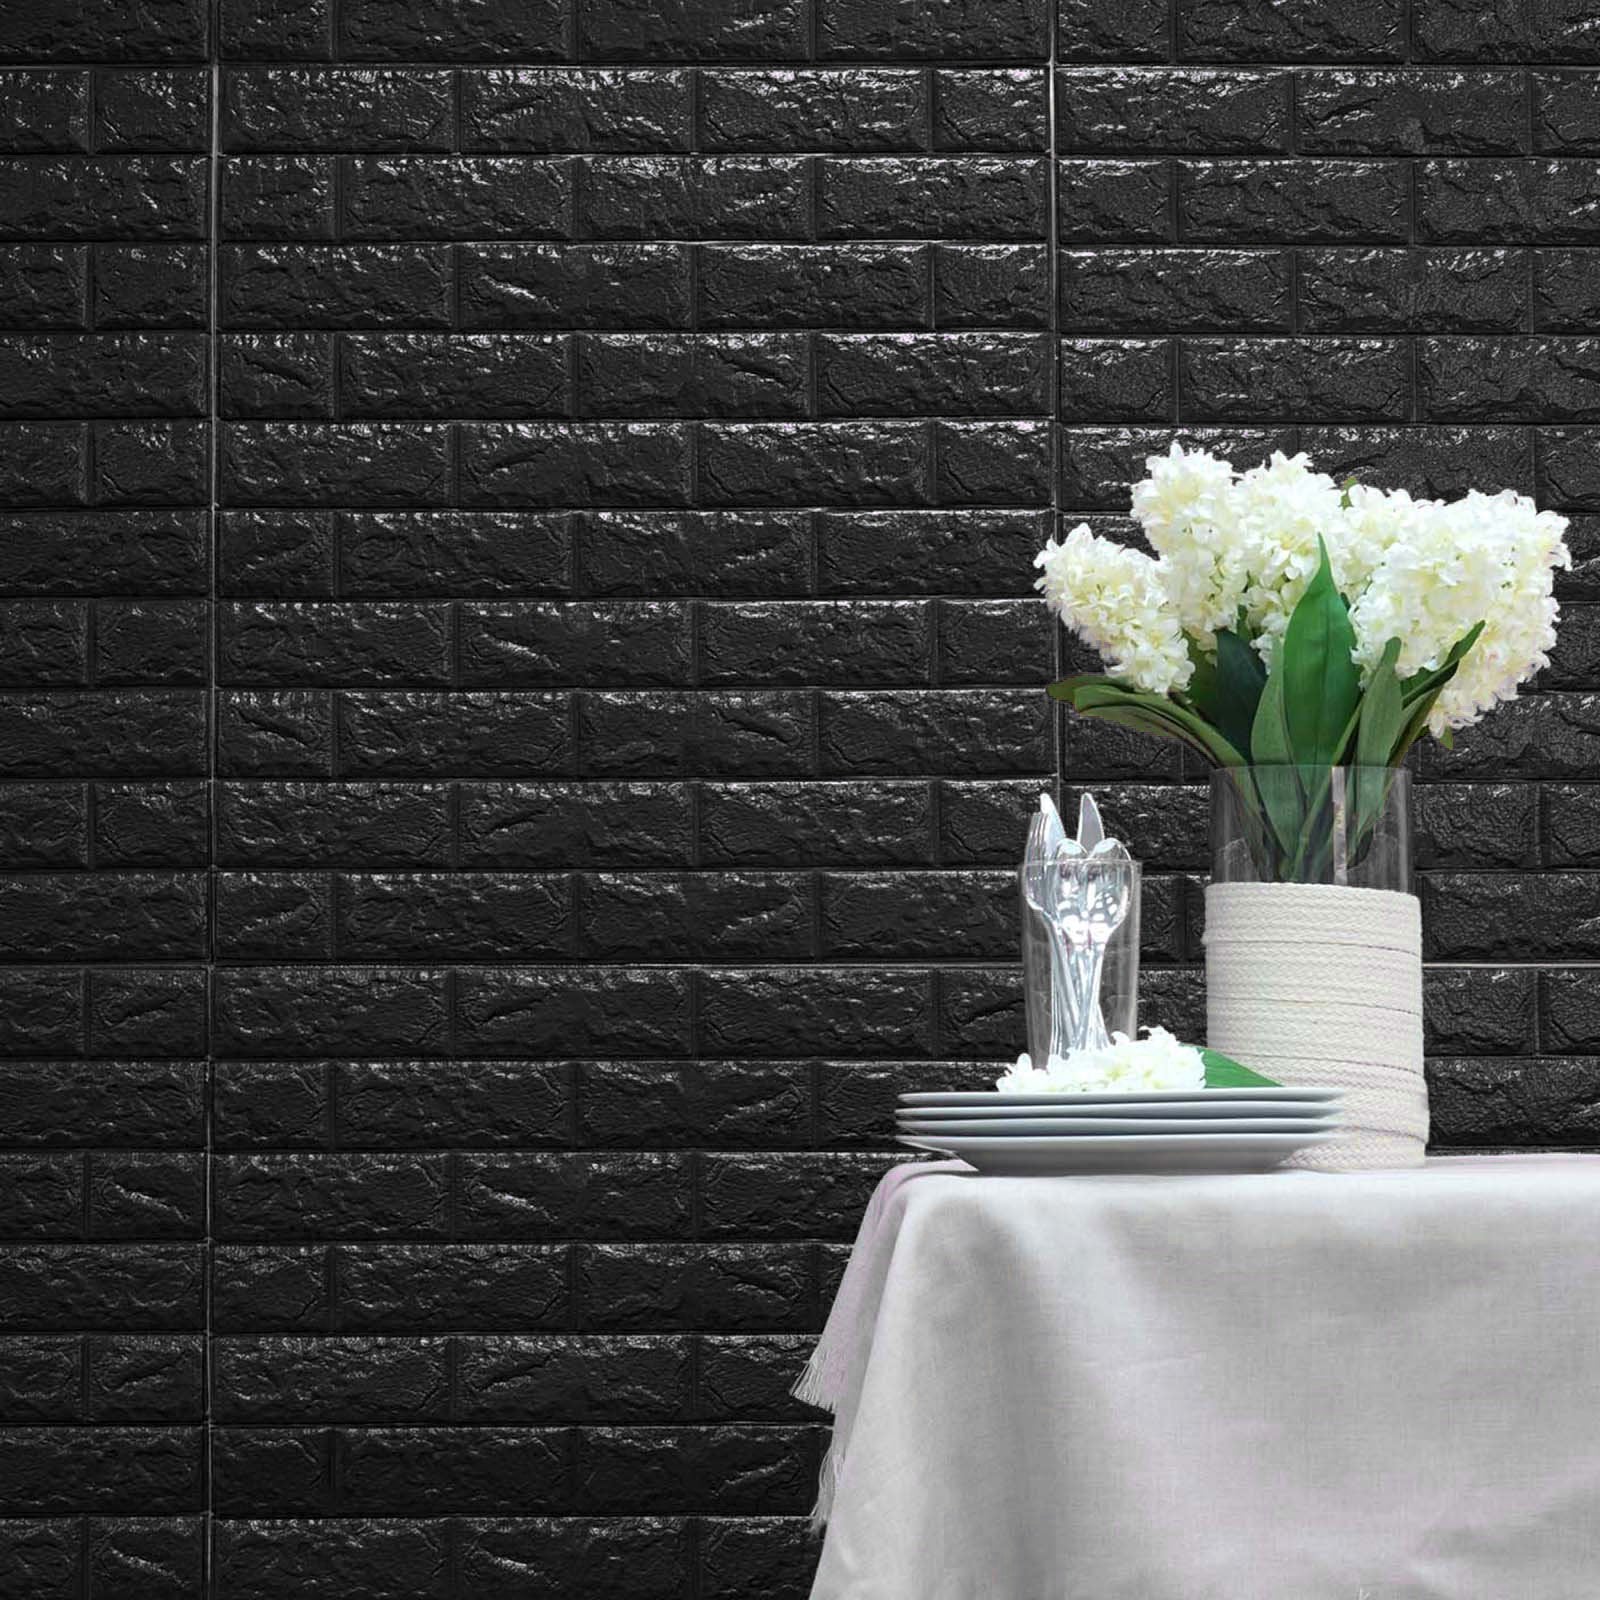 3D Foam bricks wall design